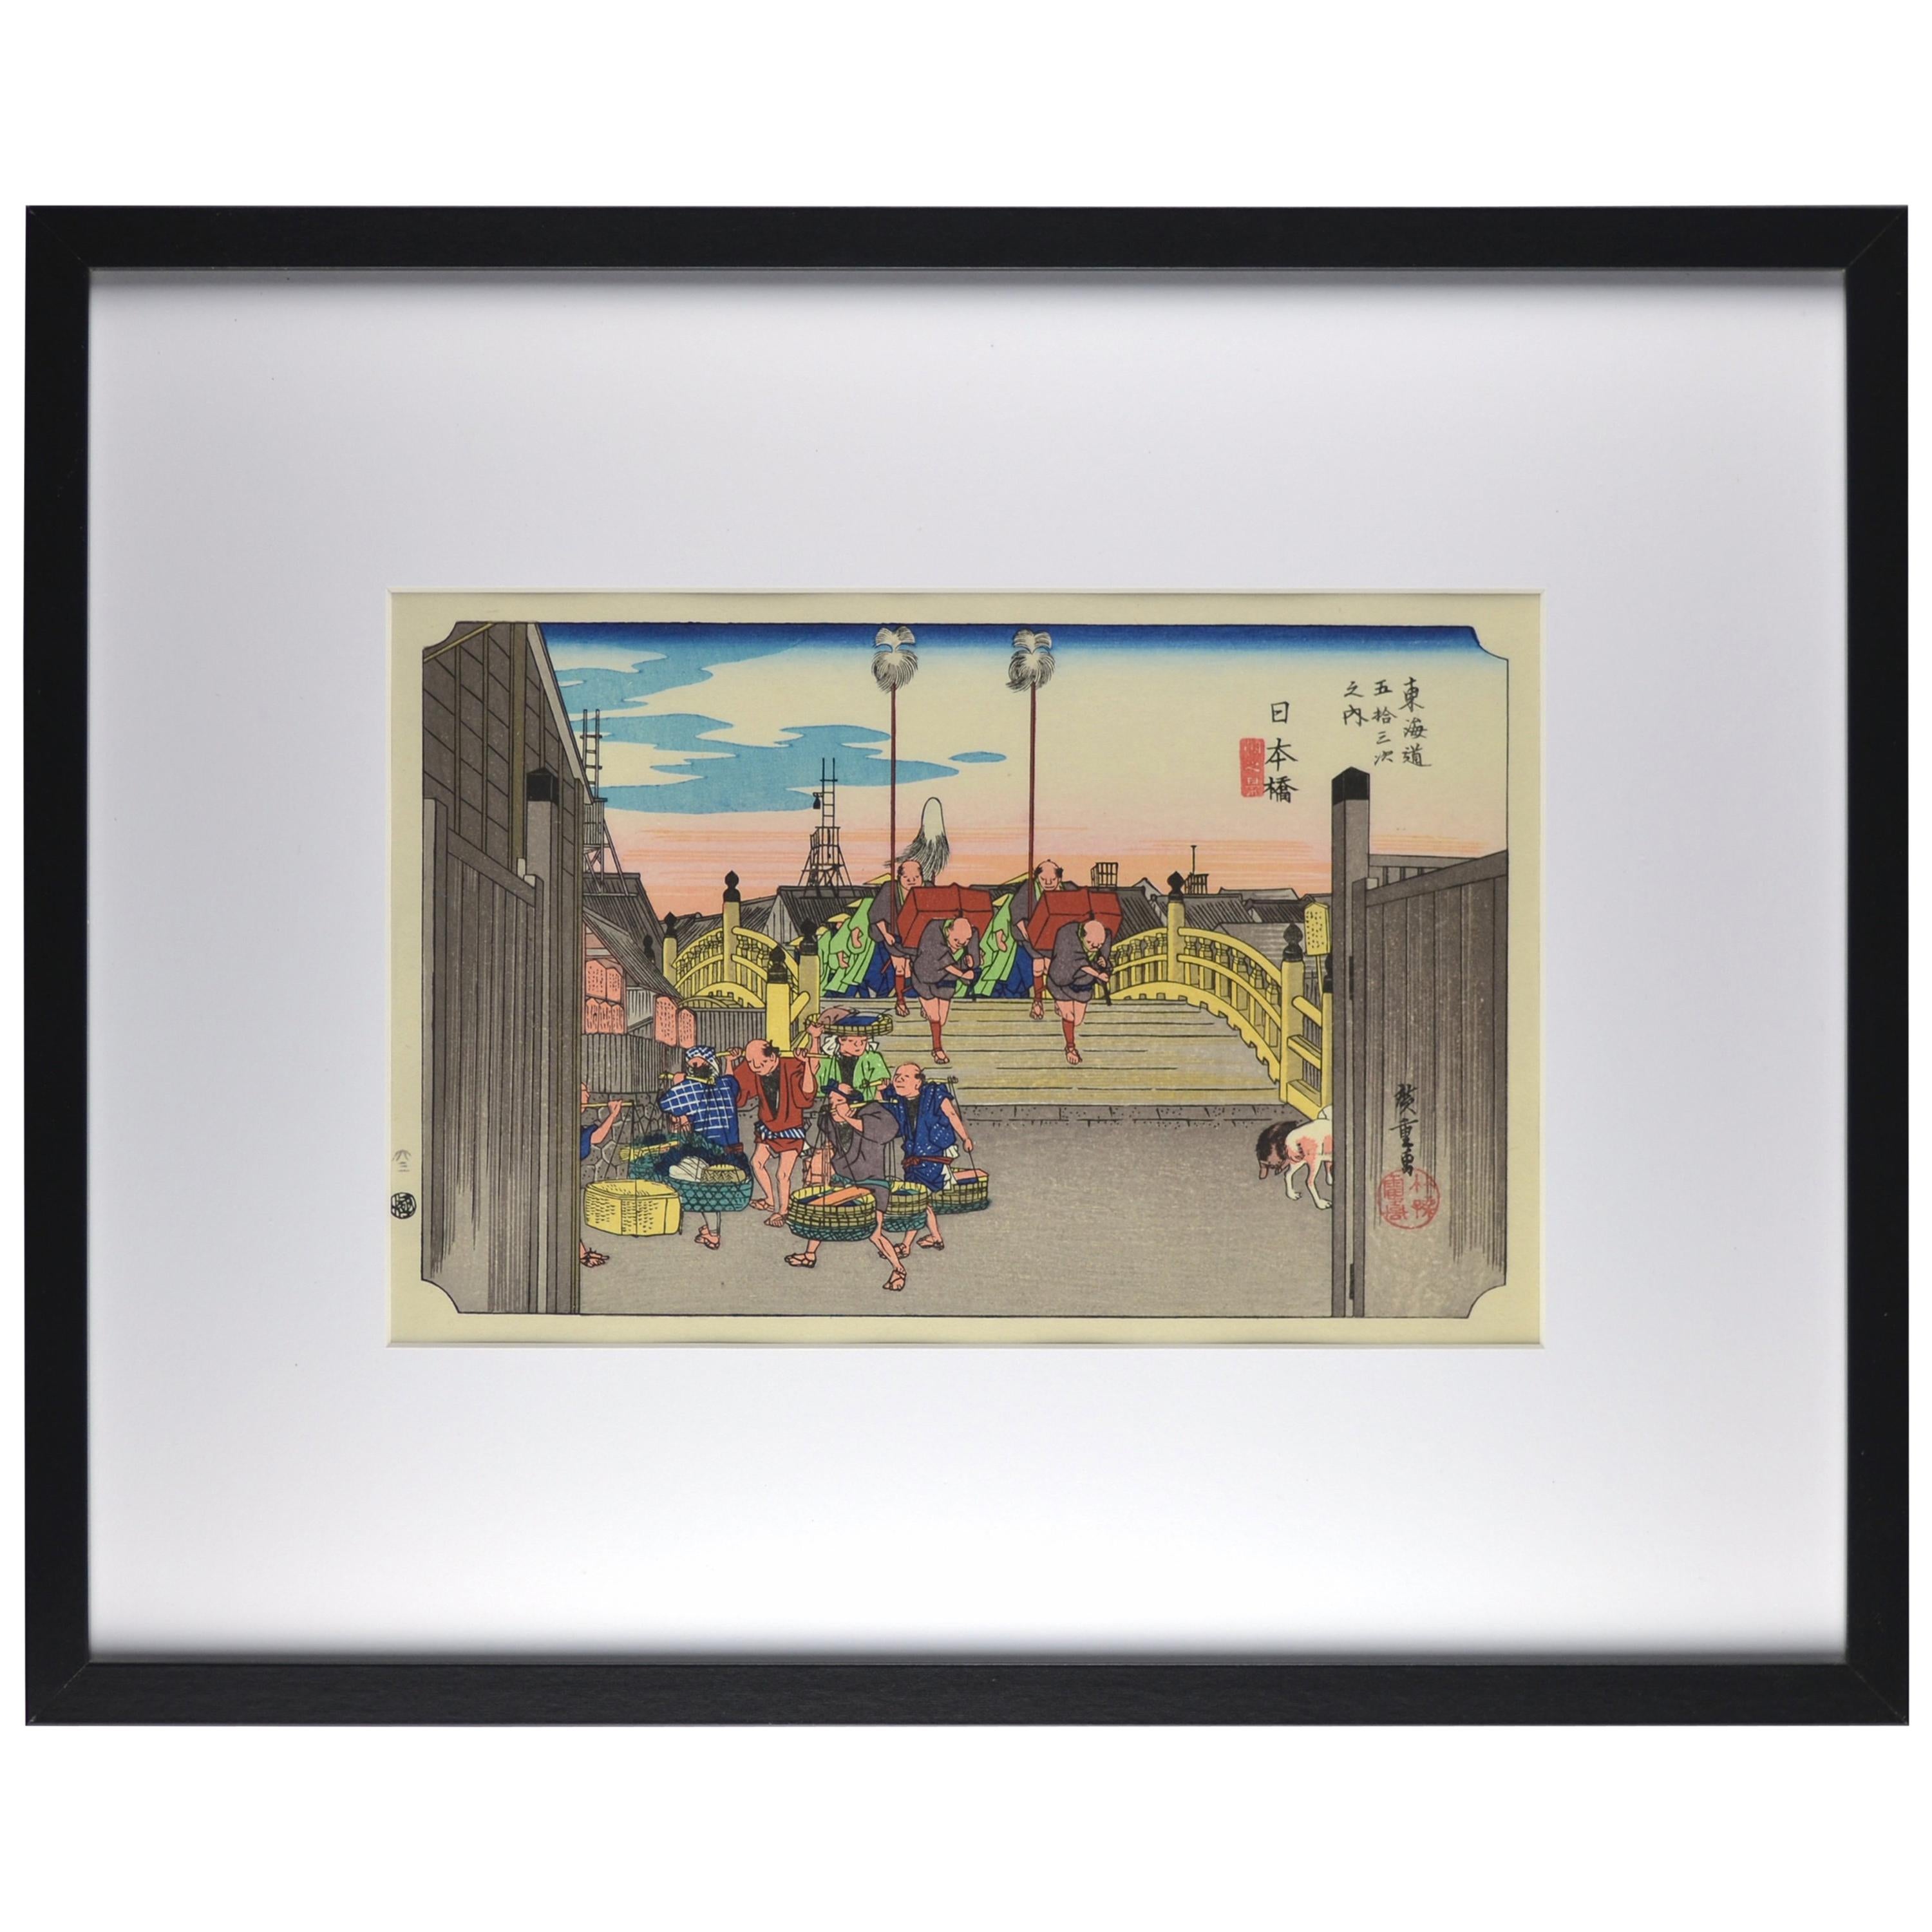 Real Woodblock Print after Utagawa Hiroshige's 53 Stations of the Tokaido For Sale